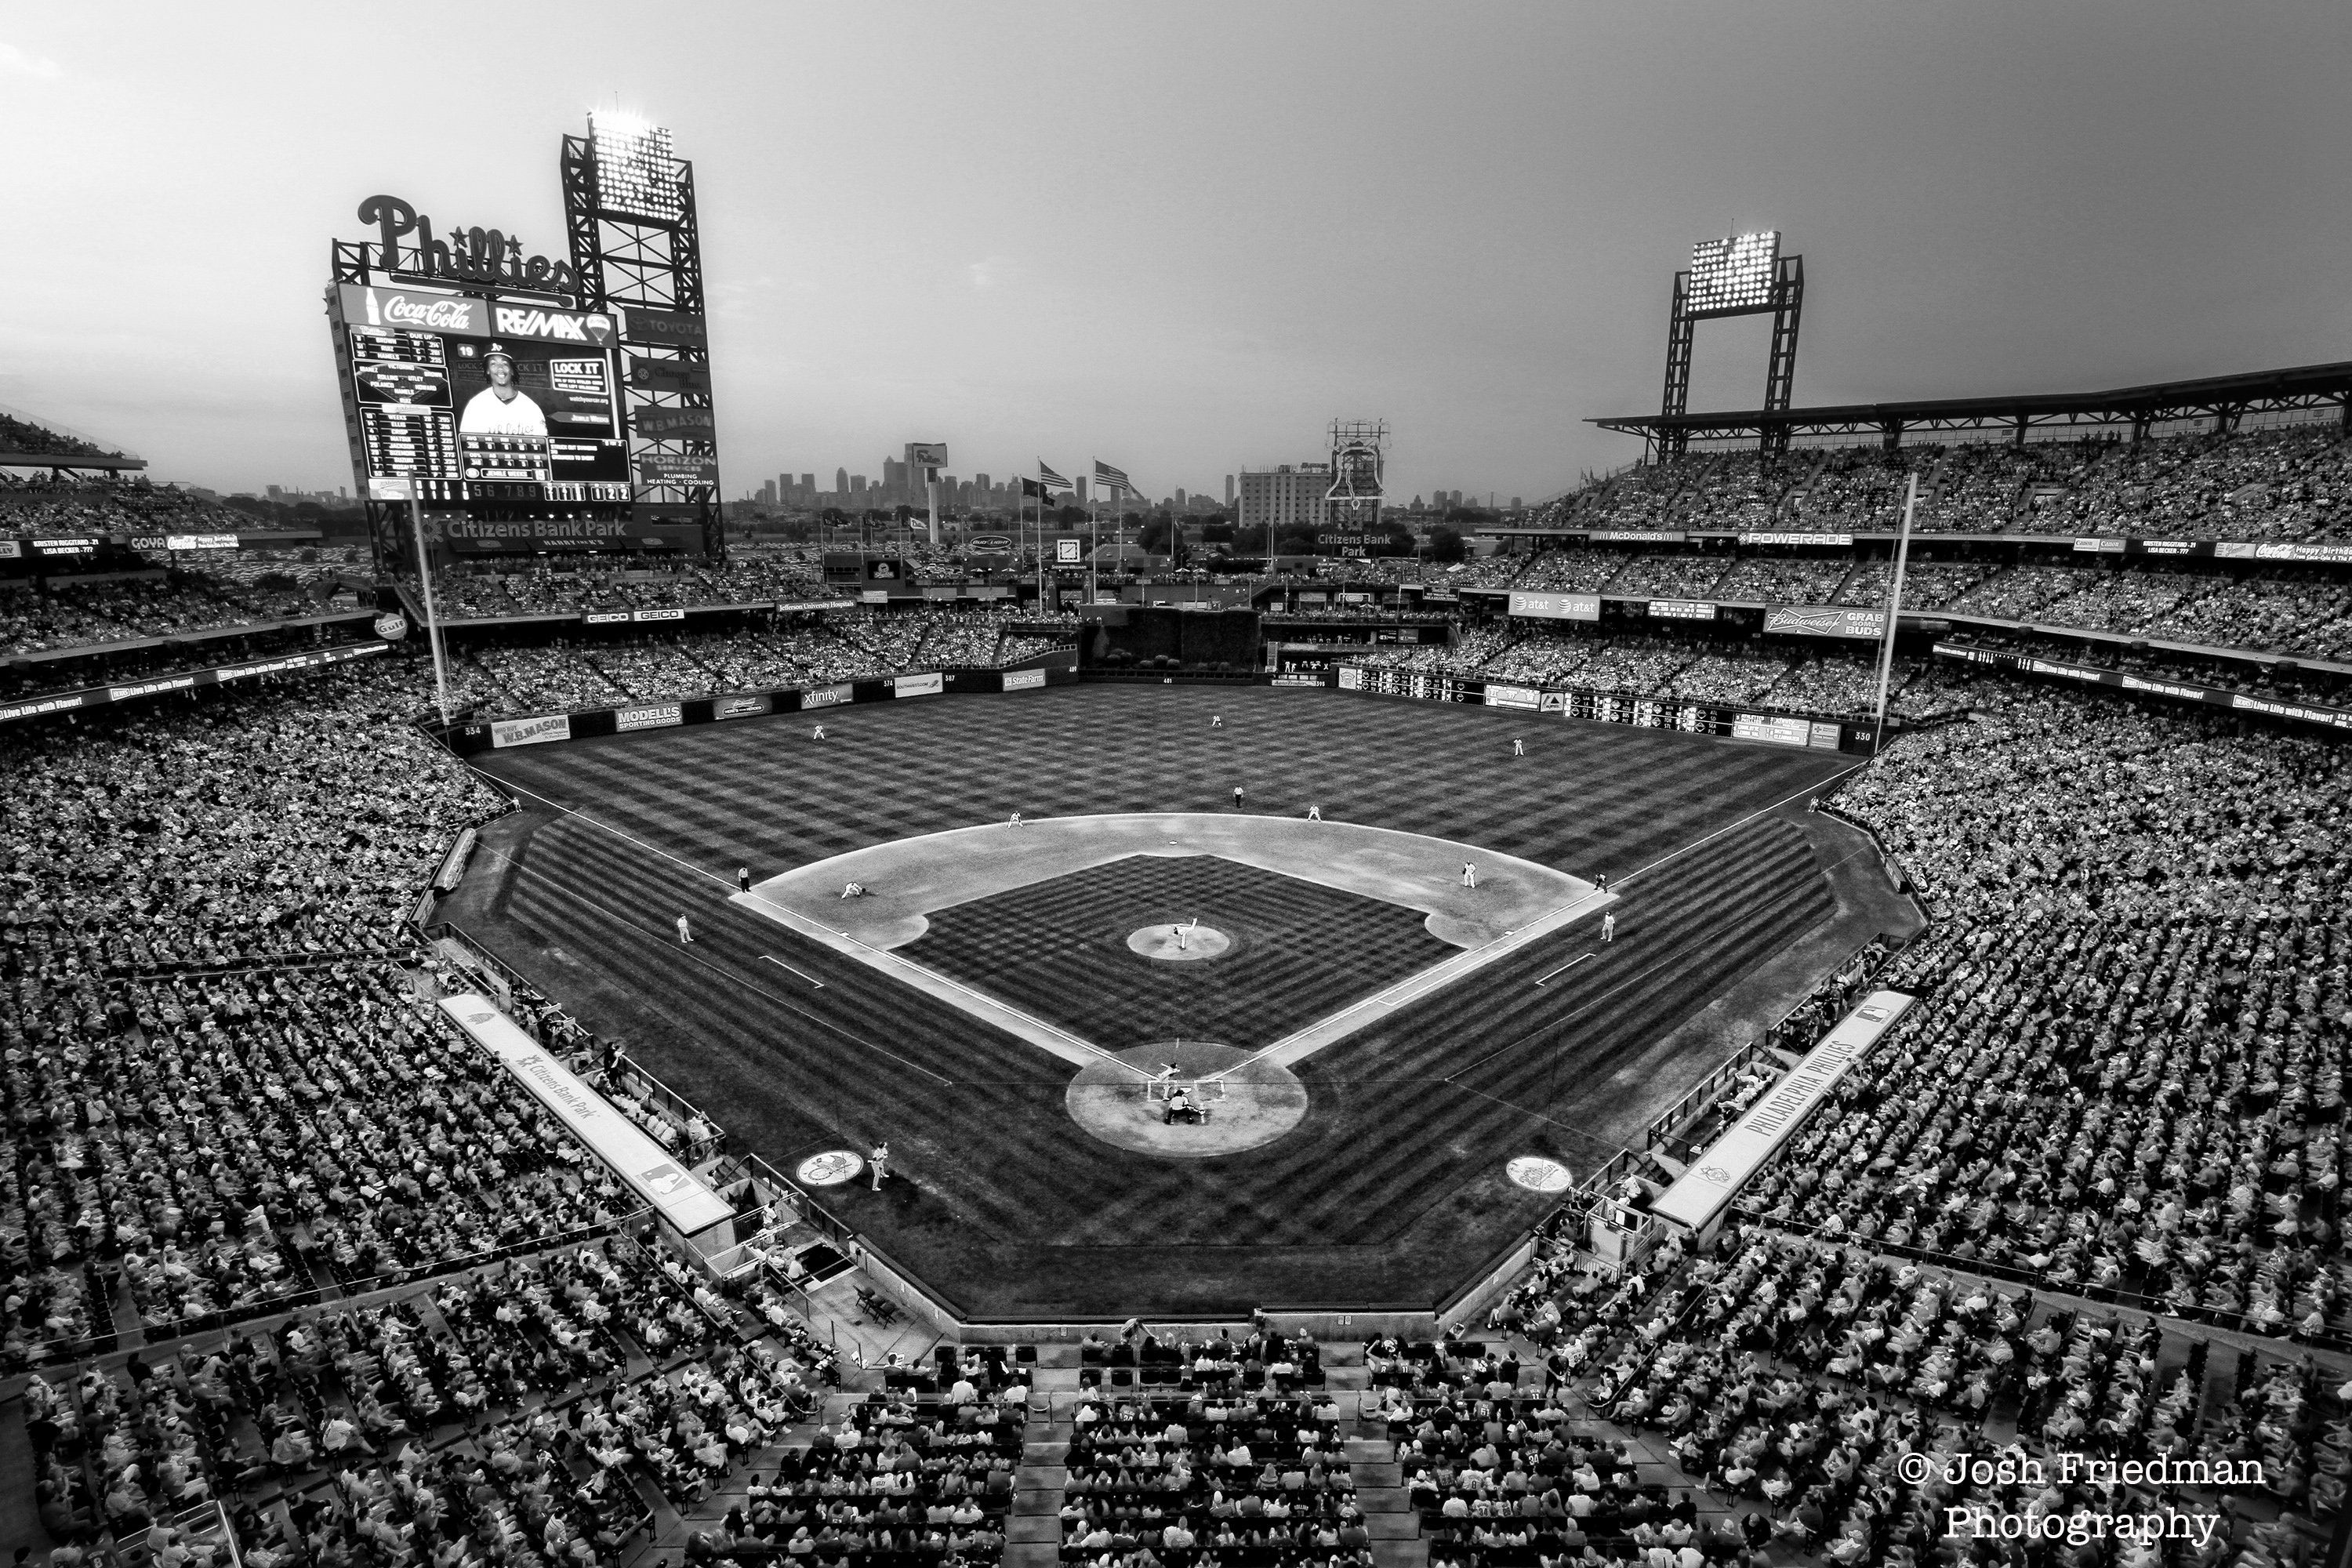 Panoramic View Of 29,183 Baseball Fans At Citizens Bank Park